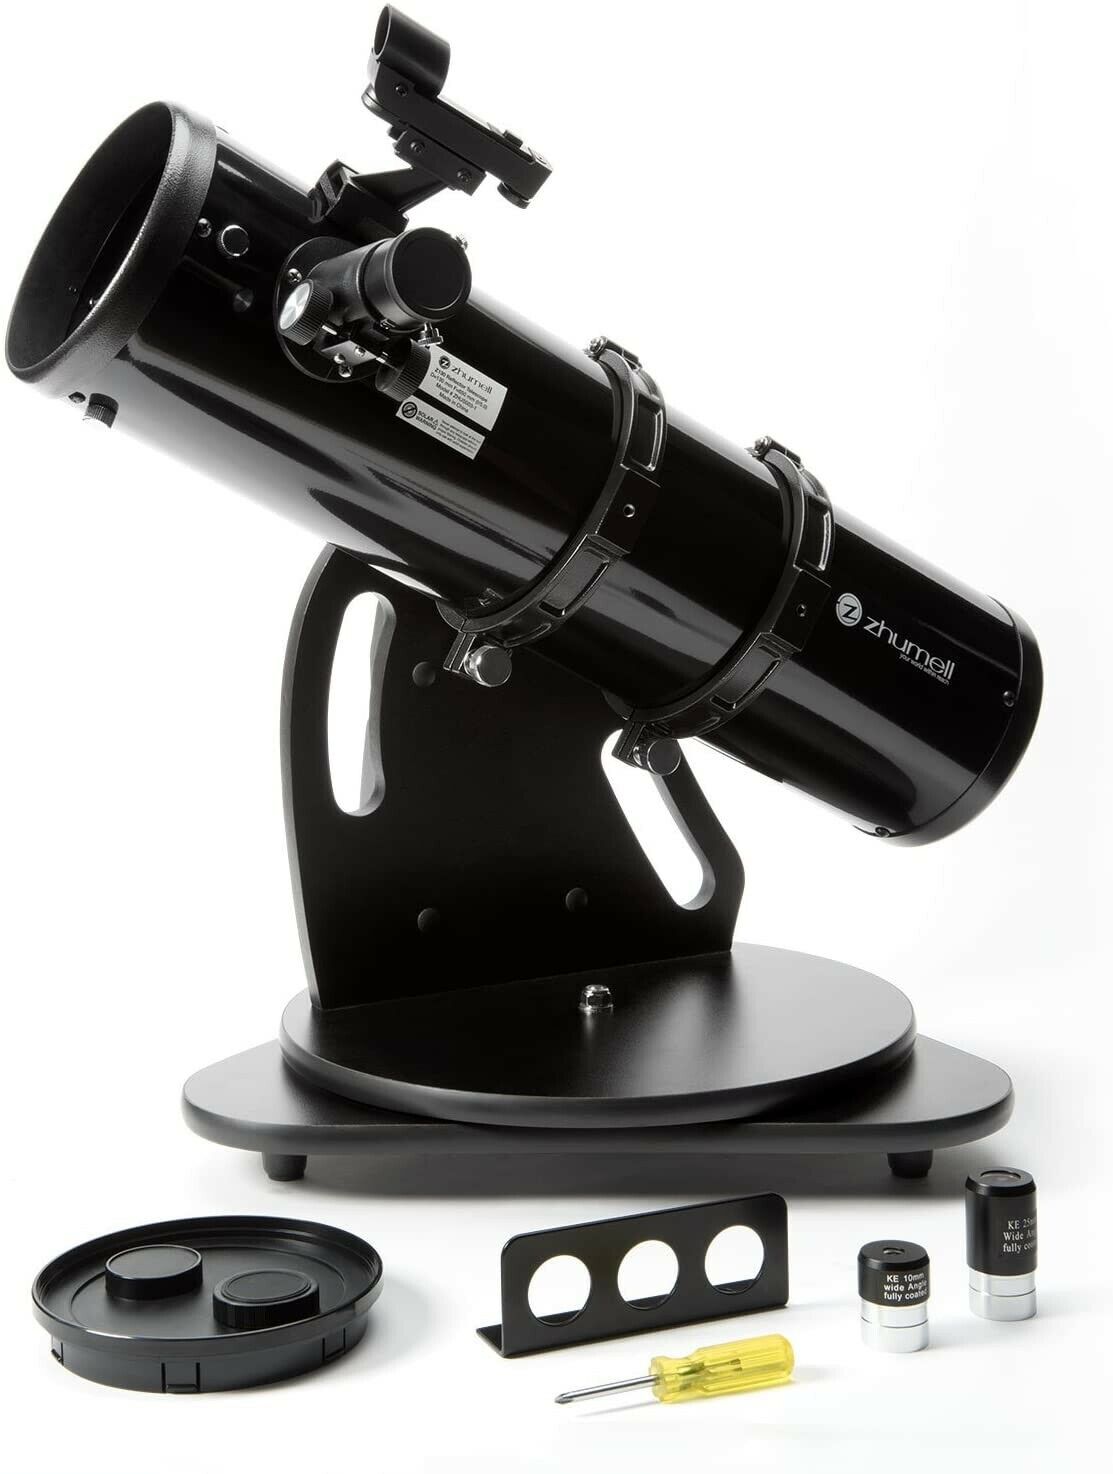 Zhumell Z130 Portable Altazimuth Reflector Telescope ZHUS003-1 